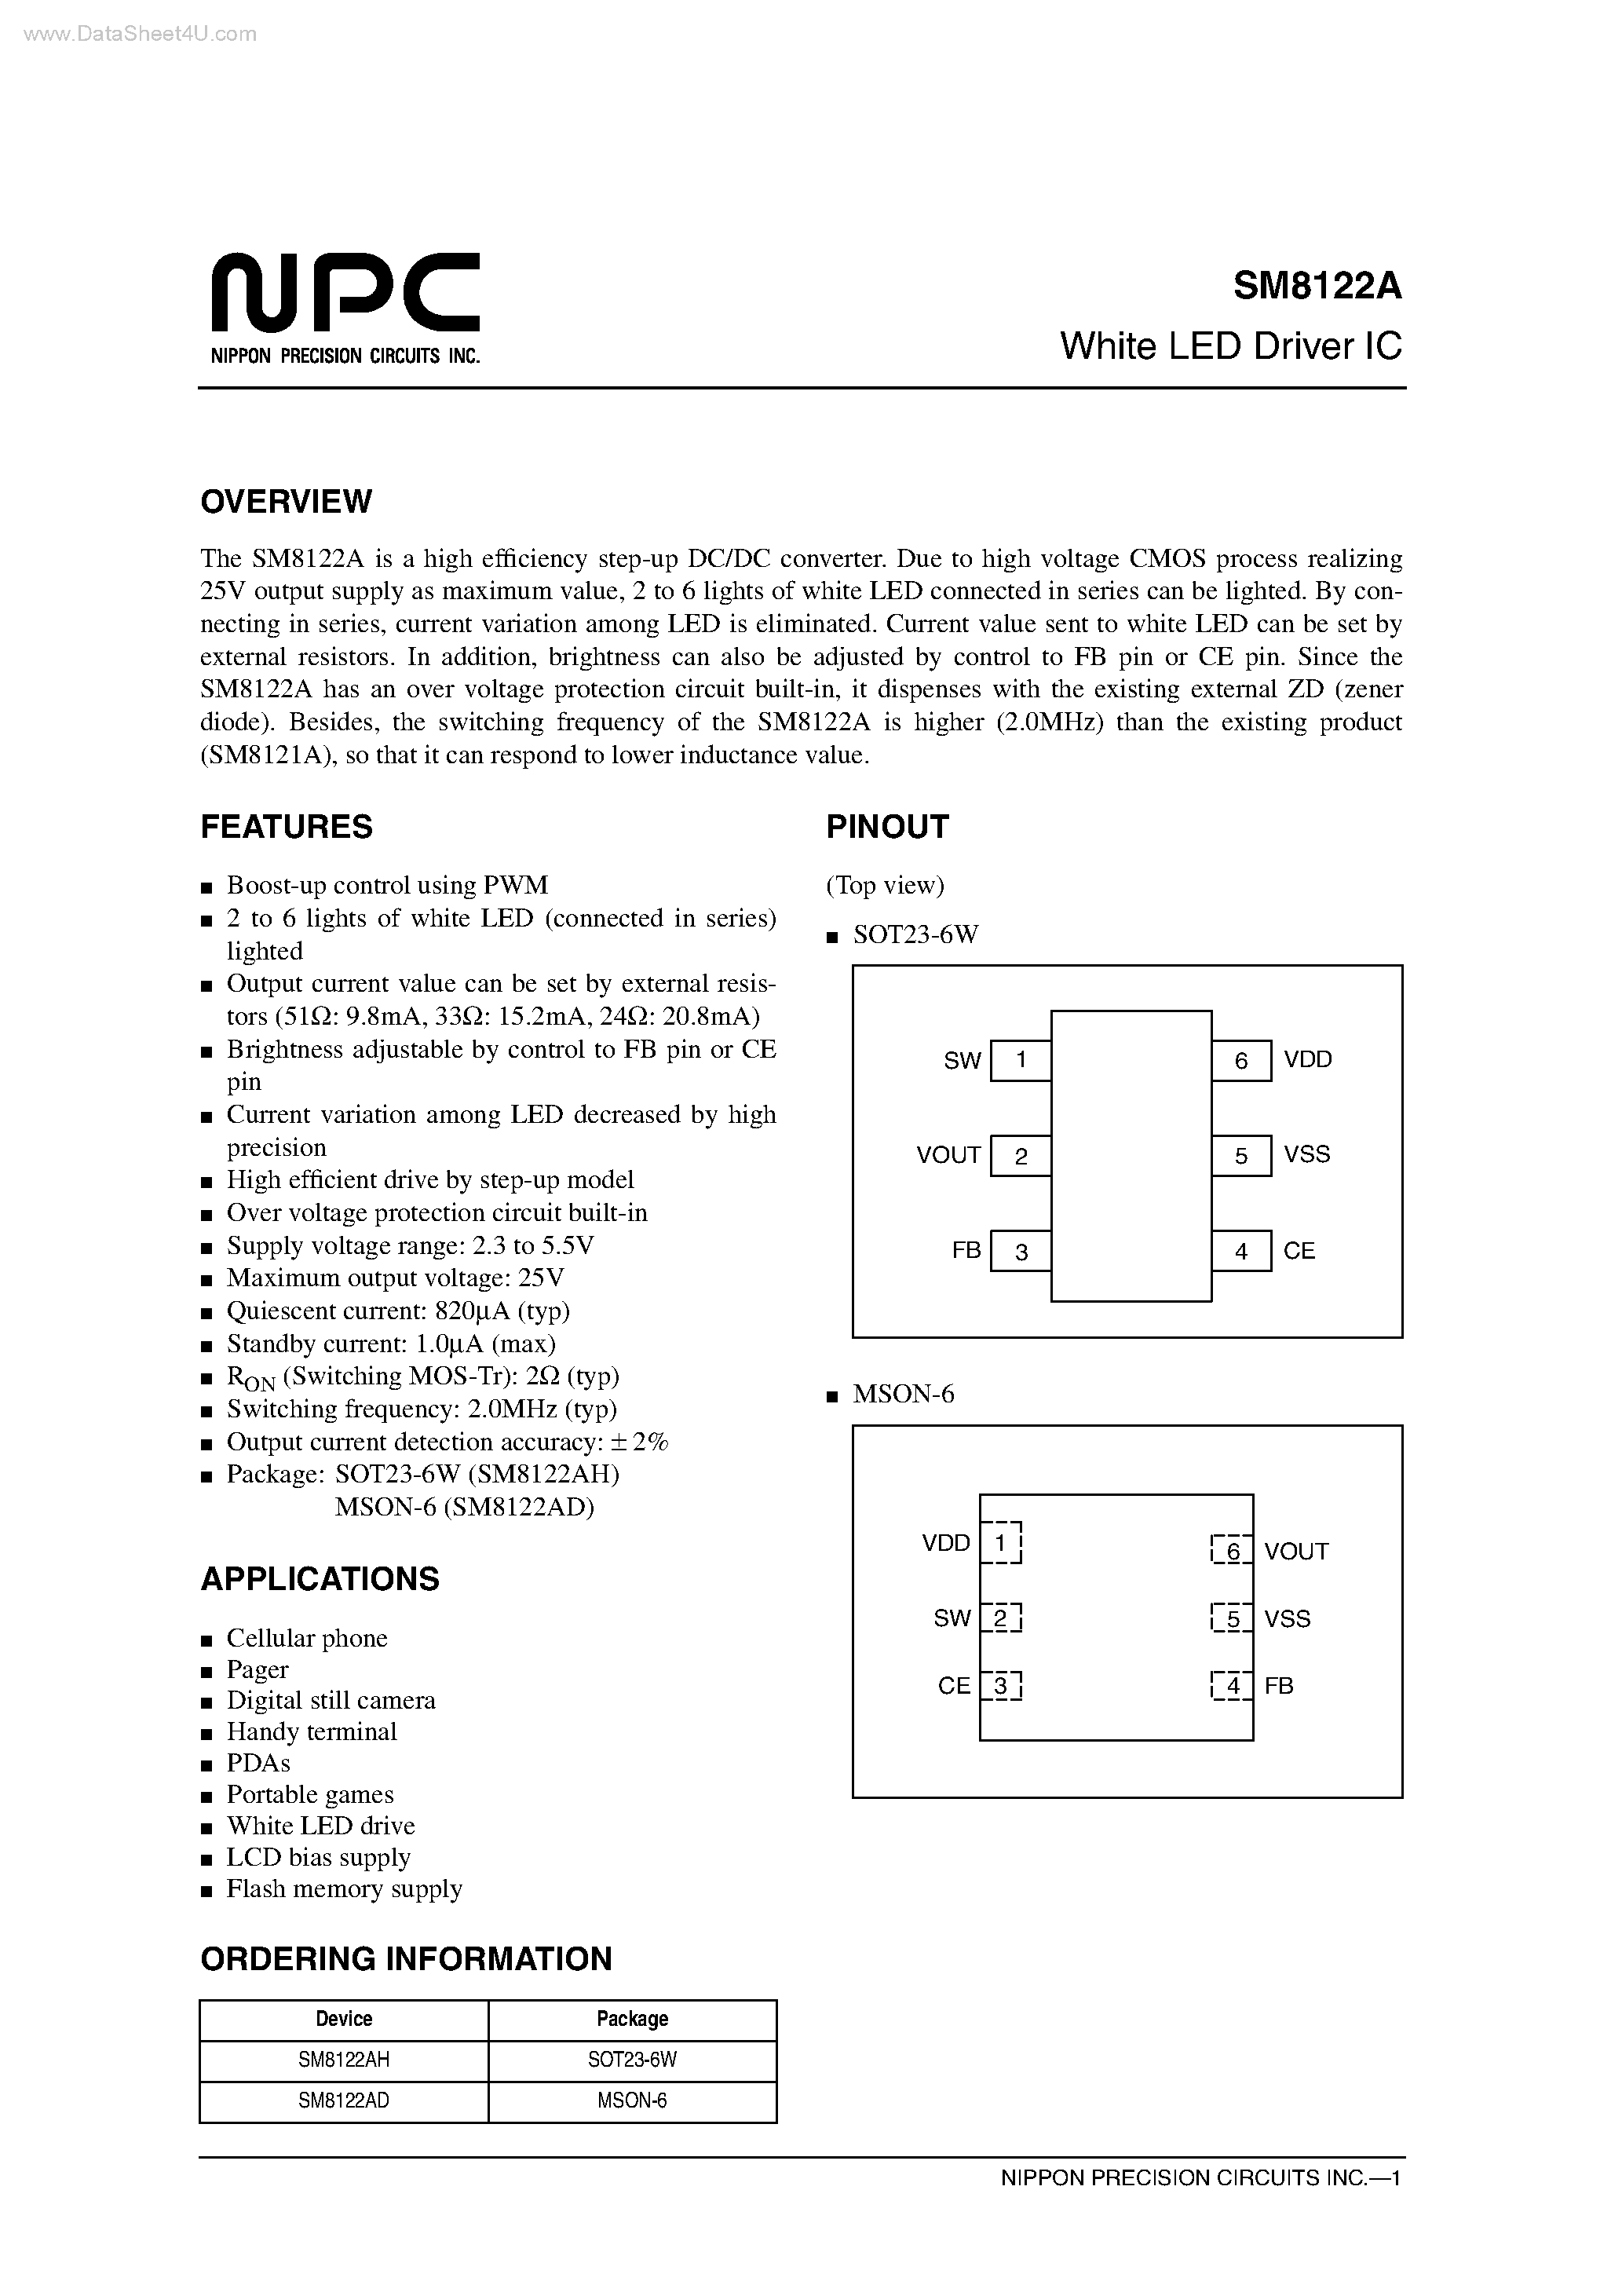 Datasheet SM8122A - White LED Driver IC page 1